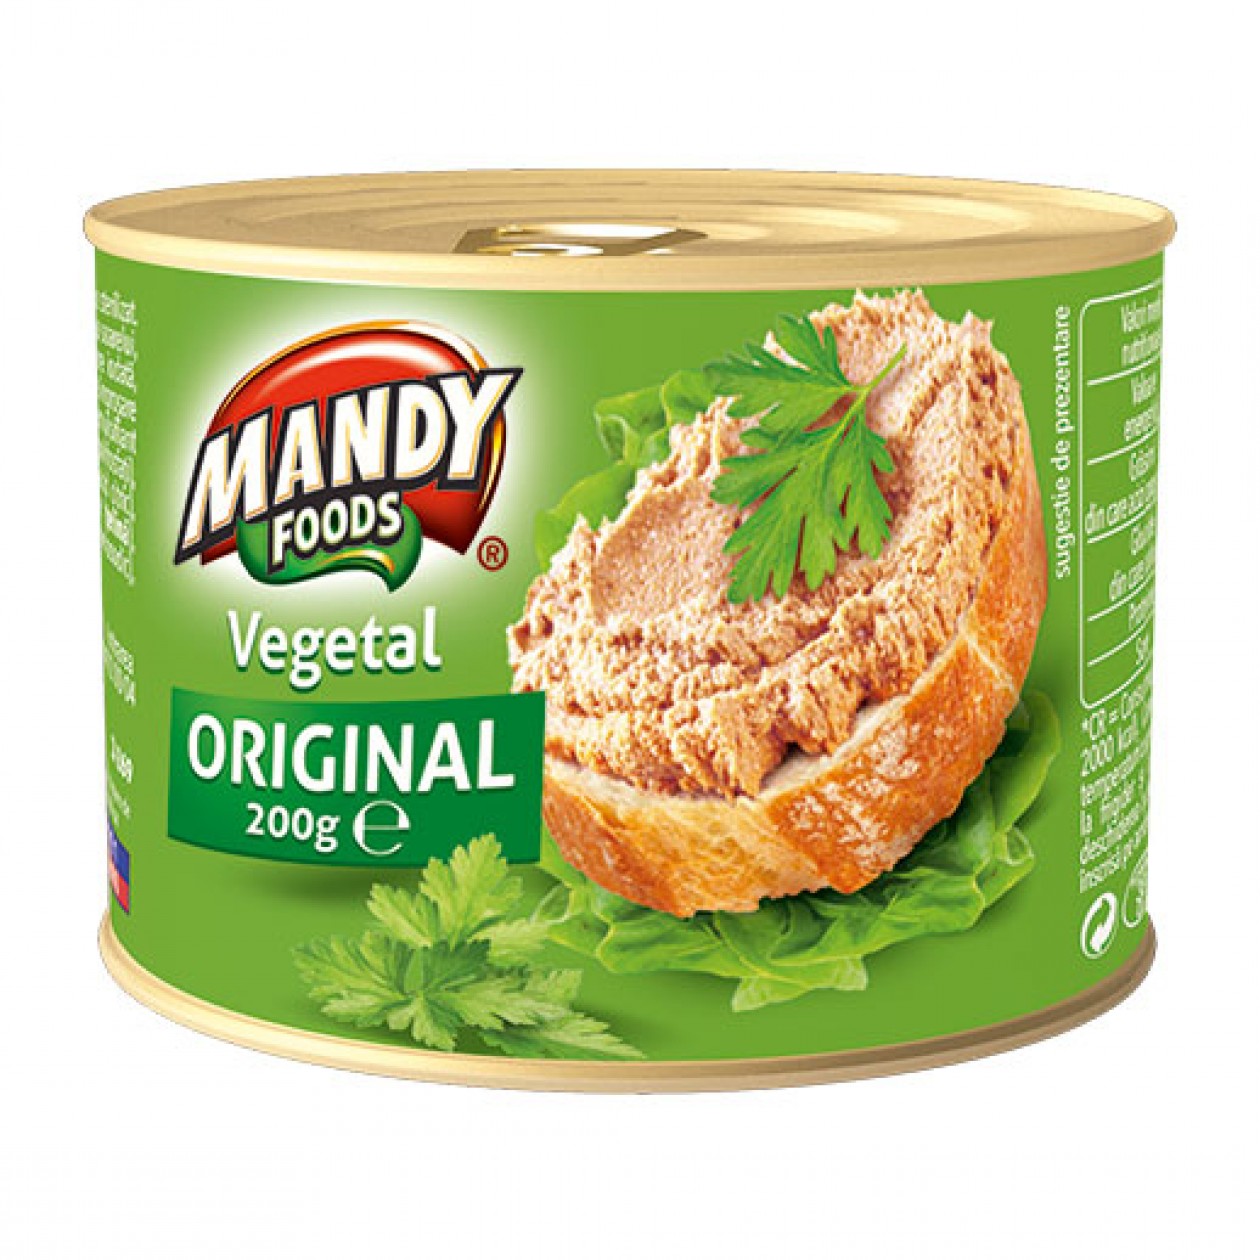 Mandy Foods Pate Veg. 6 x 200g